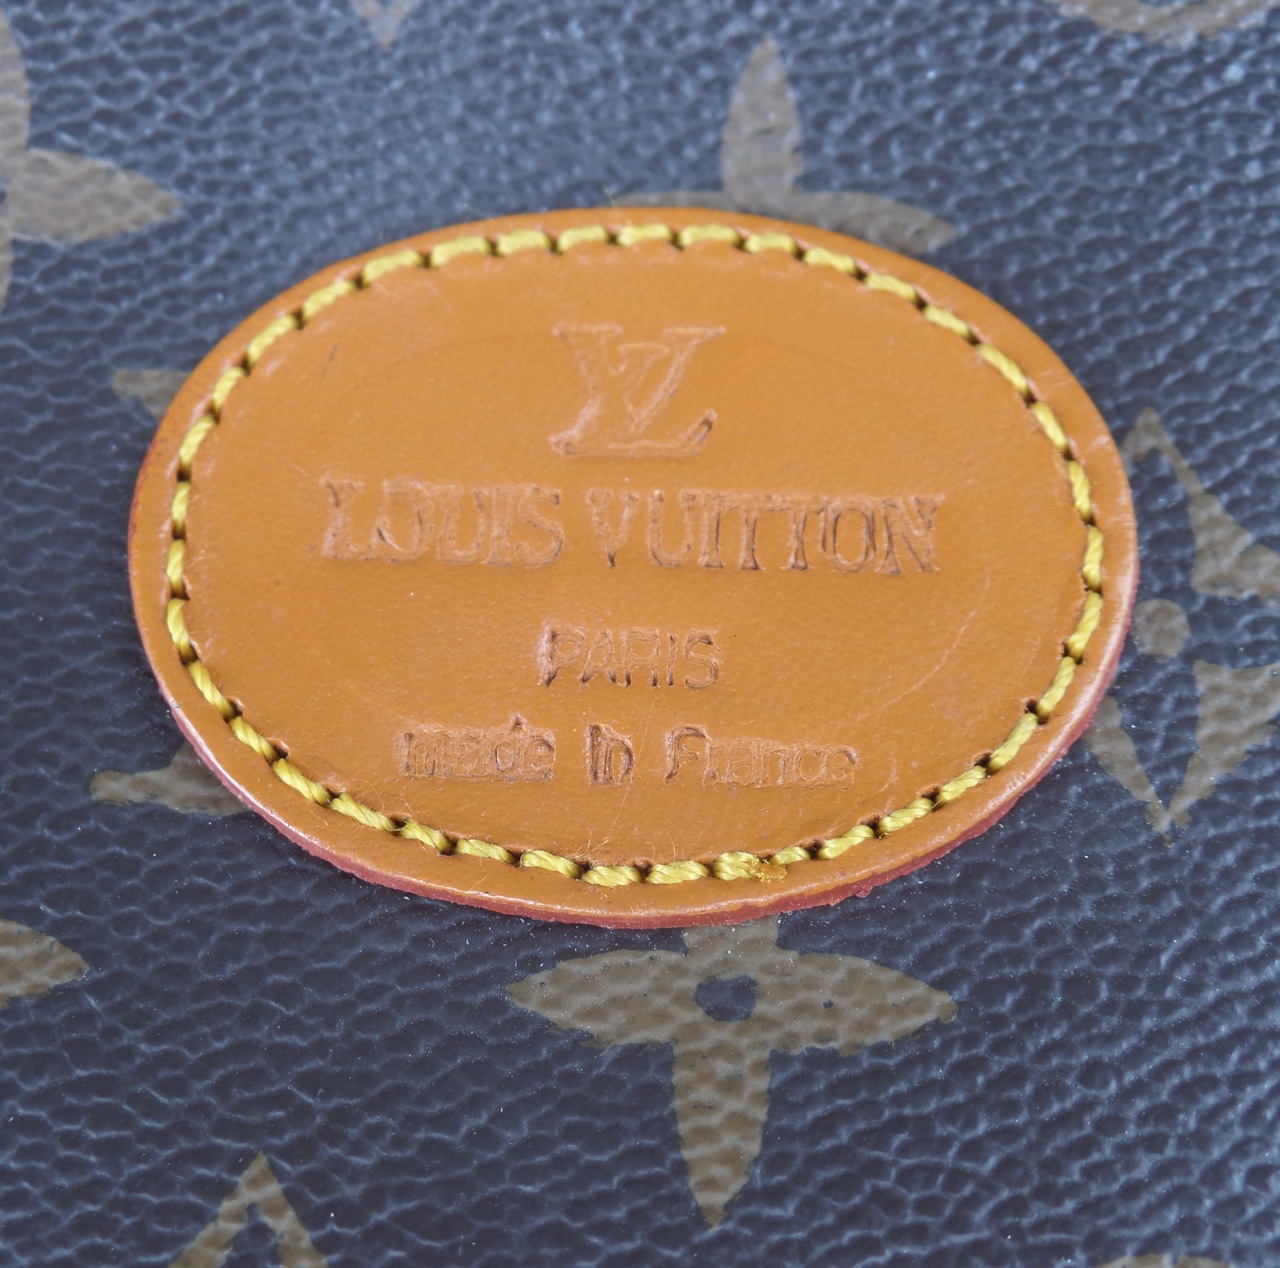 Fake Vintage Louis Vuitton?? - The eBay Community